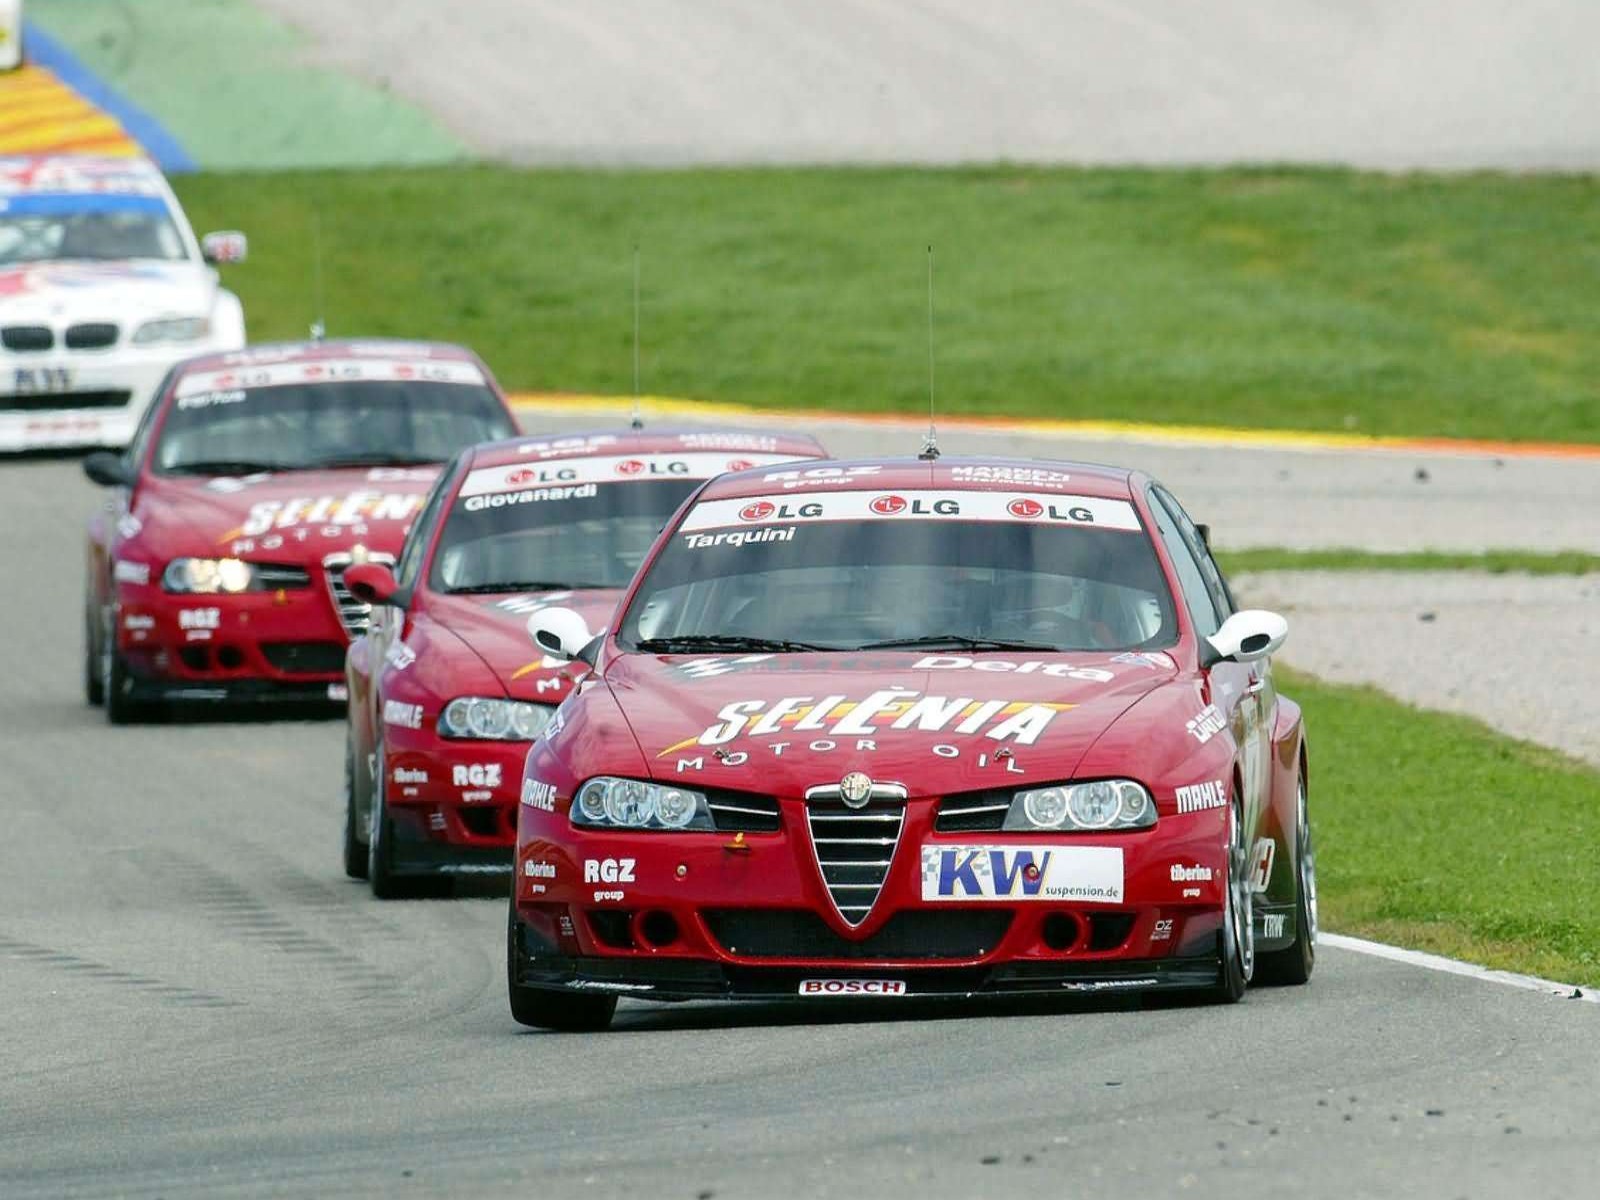 https://blogger.googleusercontent.com/img/b/R29vZ2xl/AVvXsEhSvPlwnhlXRrt92RQXTvG9WgeAUFGYqnAzL5U2vl8snObiAeJuOx8V8pTdDvtDGytRfkzciJKQlE9I8m963aacD6B2vmD1XYCpdVUfB64Qf7rnhR2lT5IqvKhqP5ncVK02cQwaqKpXzOQ/s1600/Alfa+Romeo+156+GTA+Autodelta+2004+02.jpg